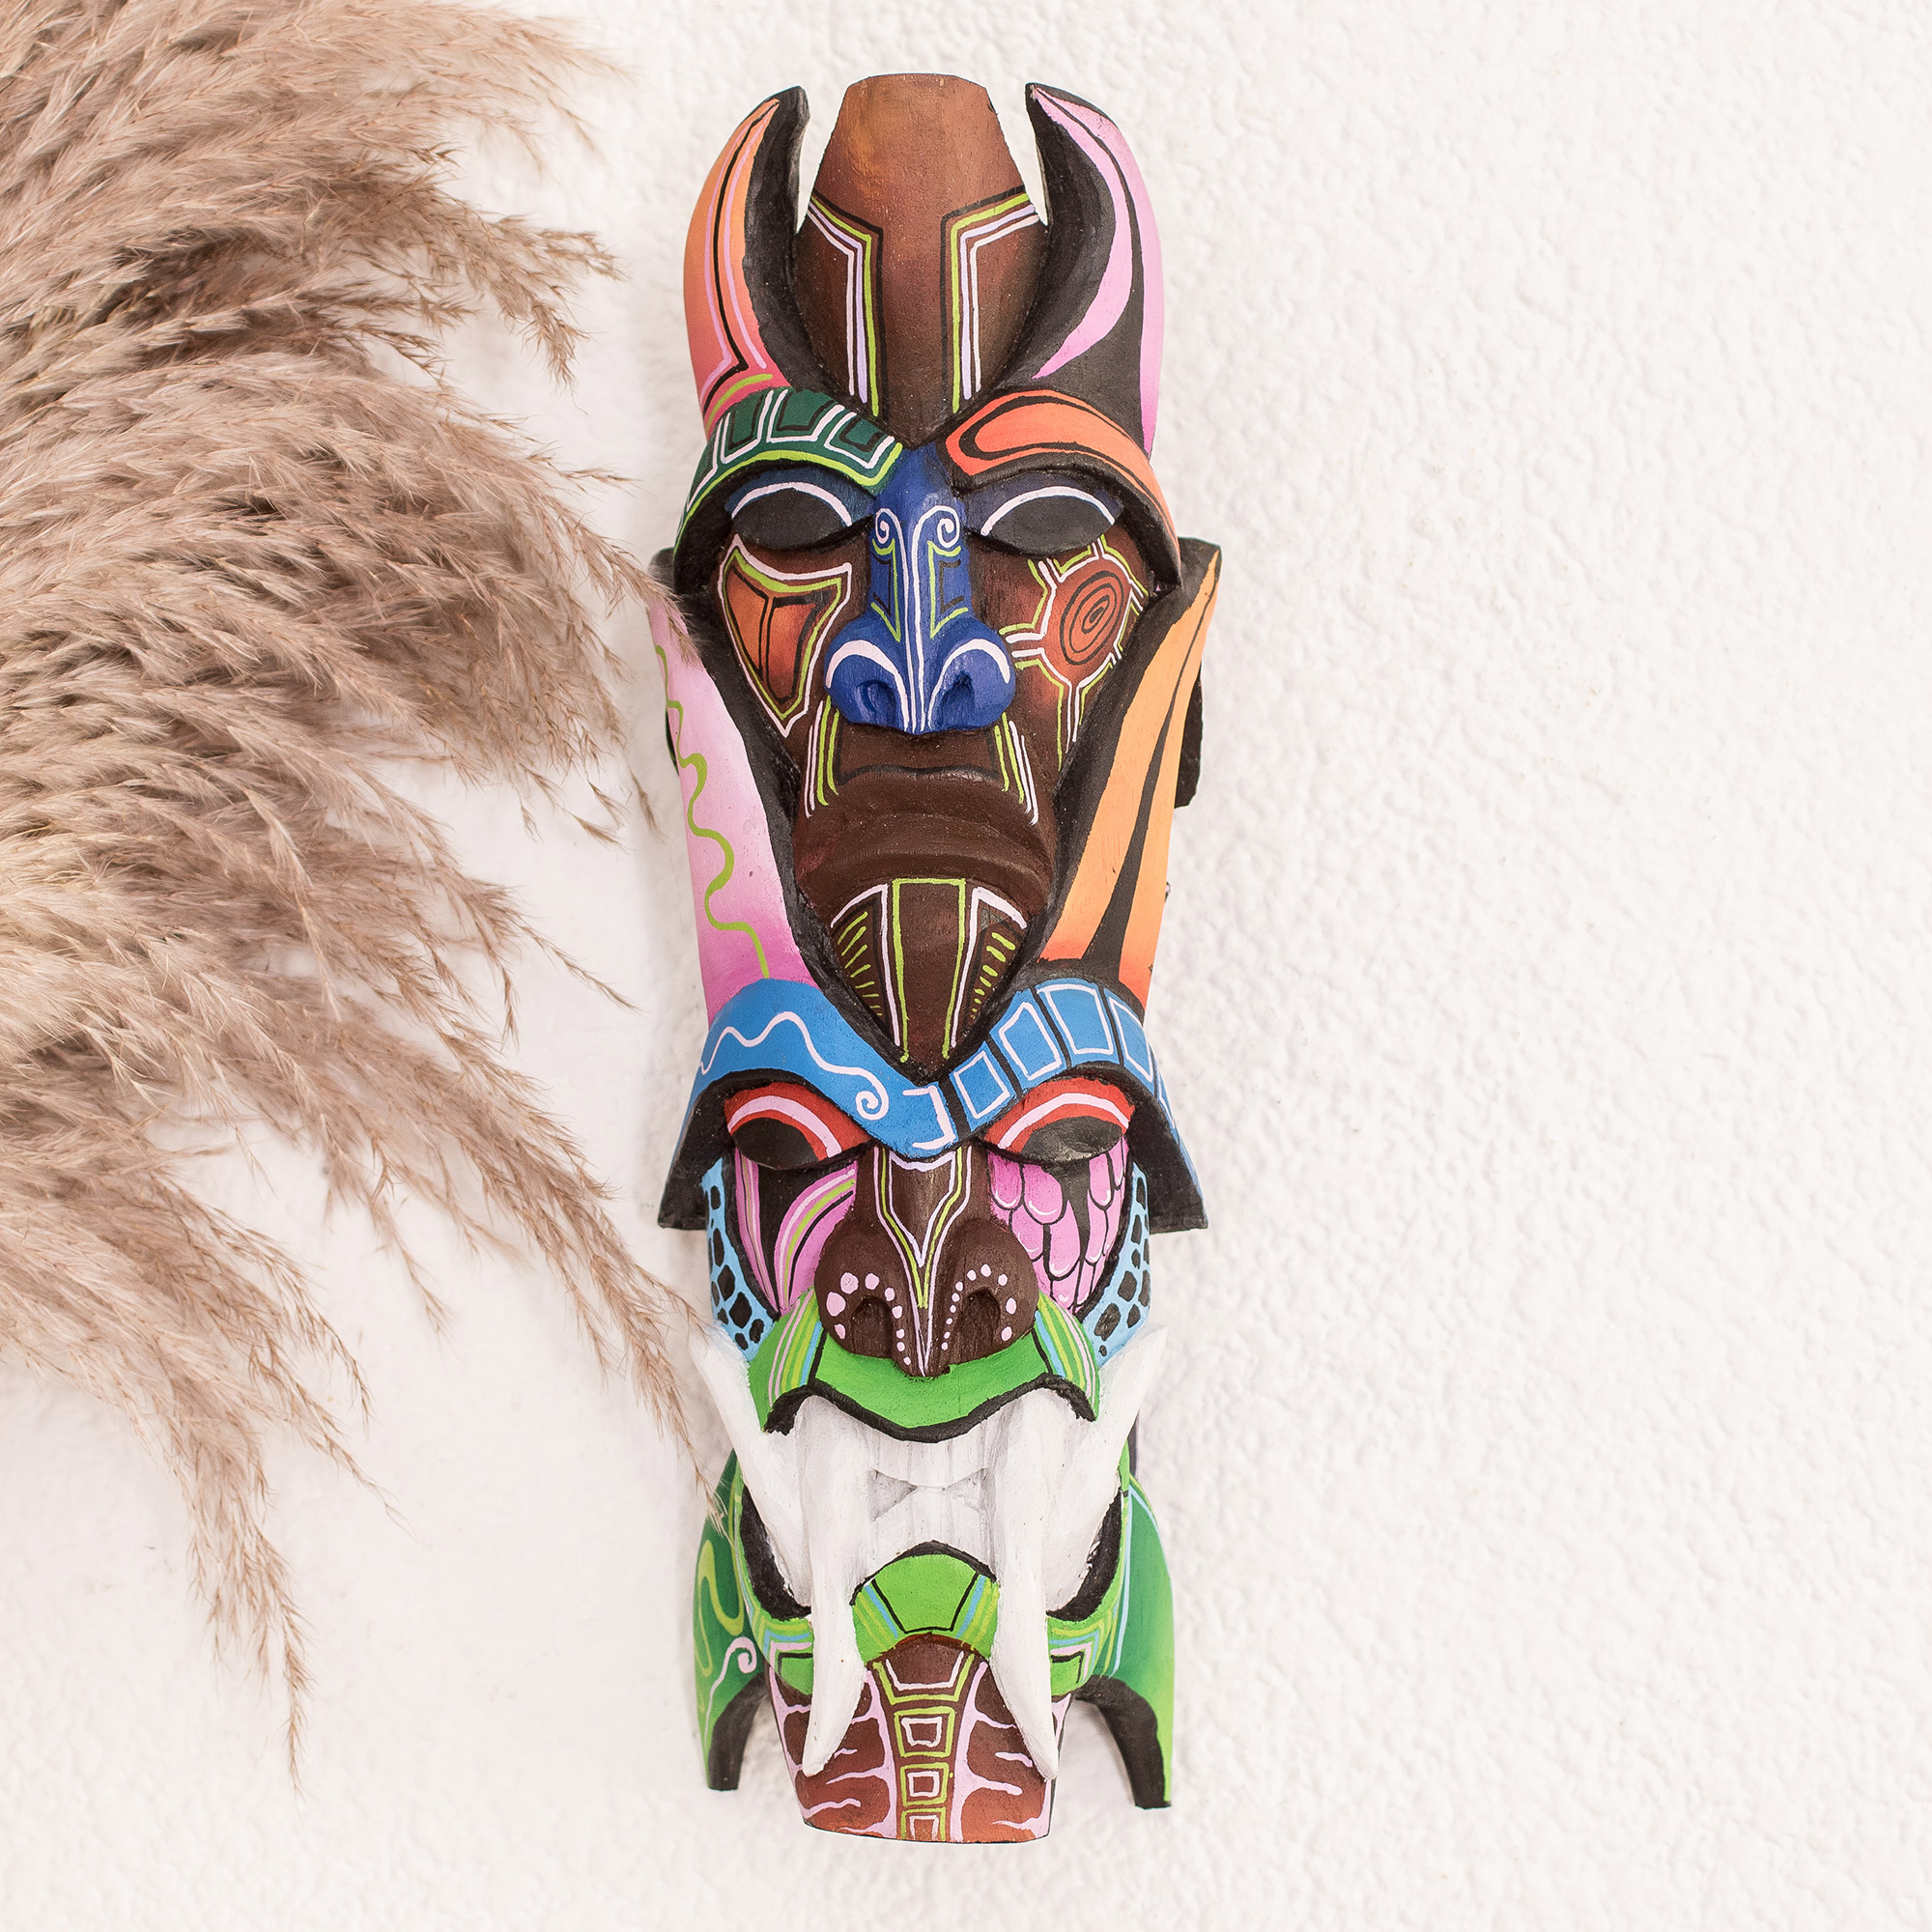 native american cultural masks